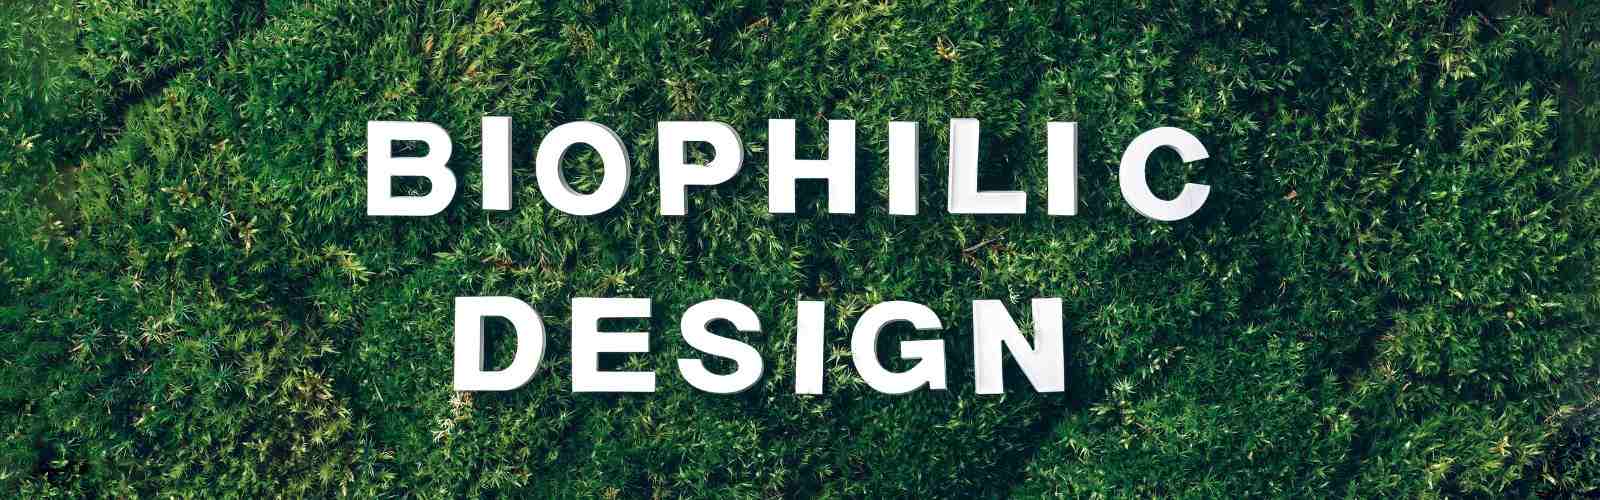 biophilic design hero image